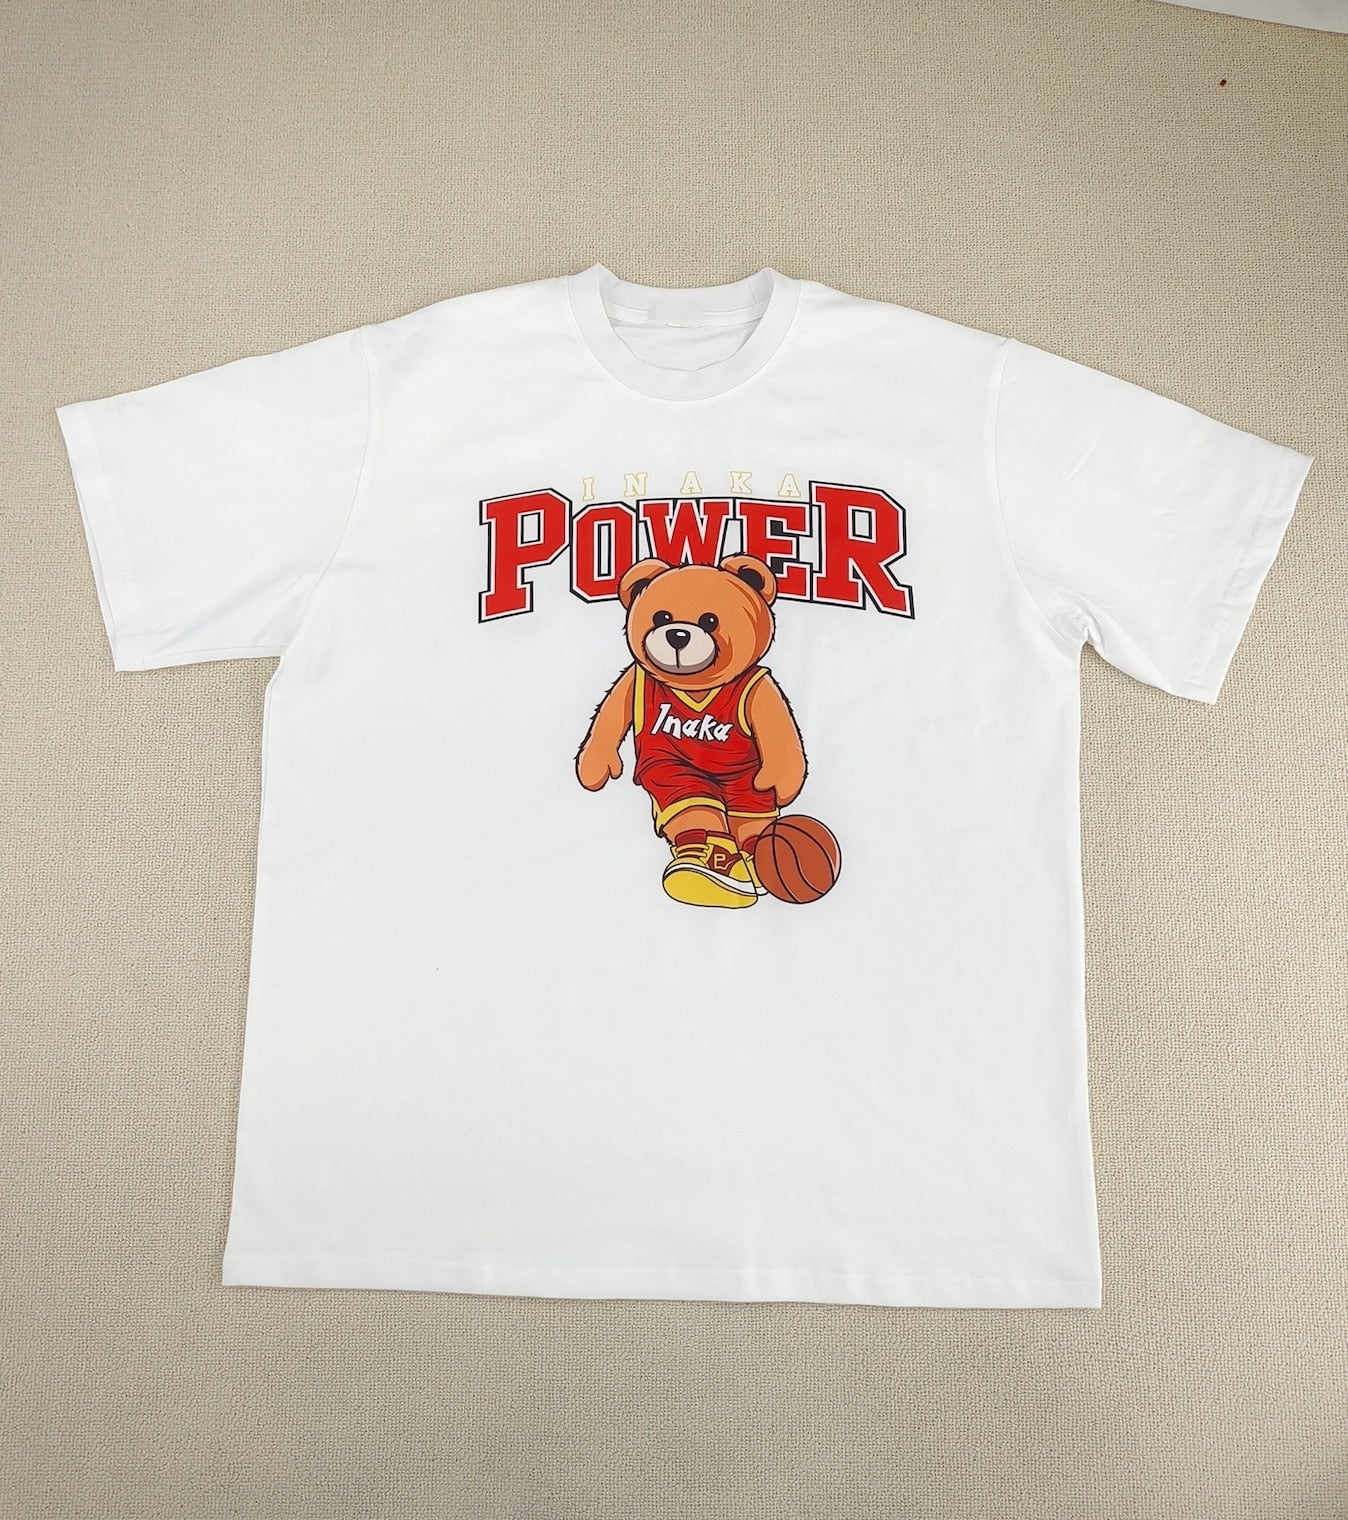 Power for Power T Shirt